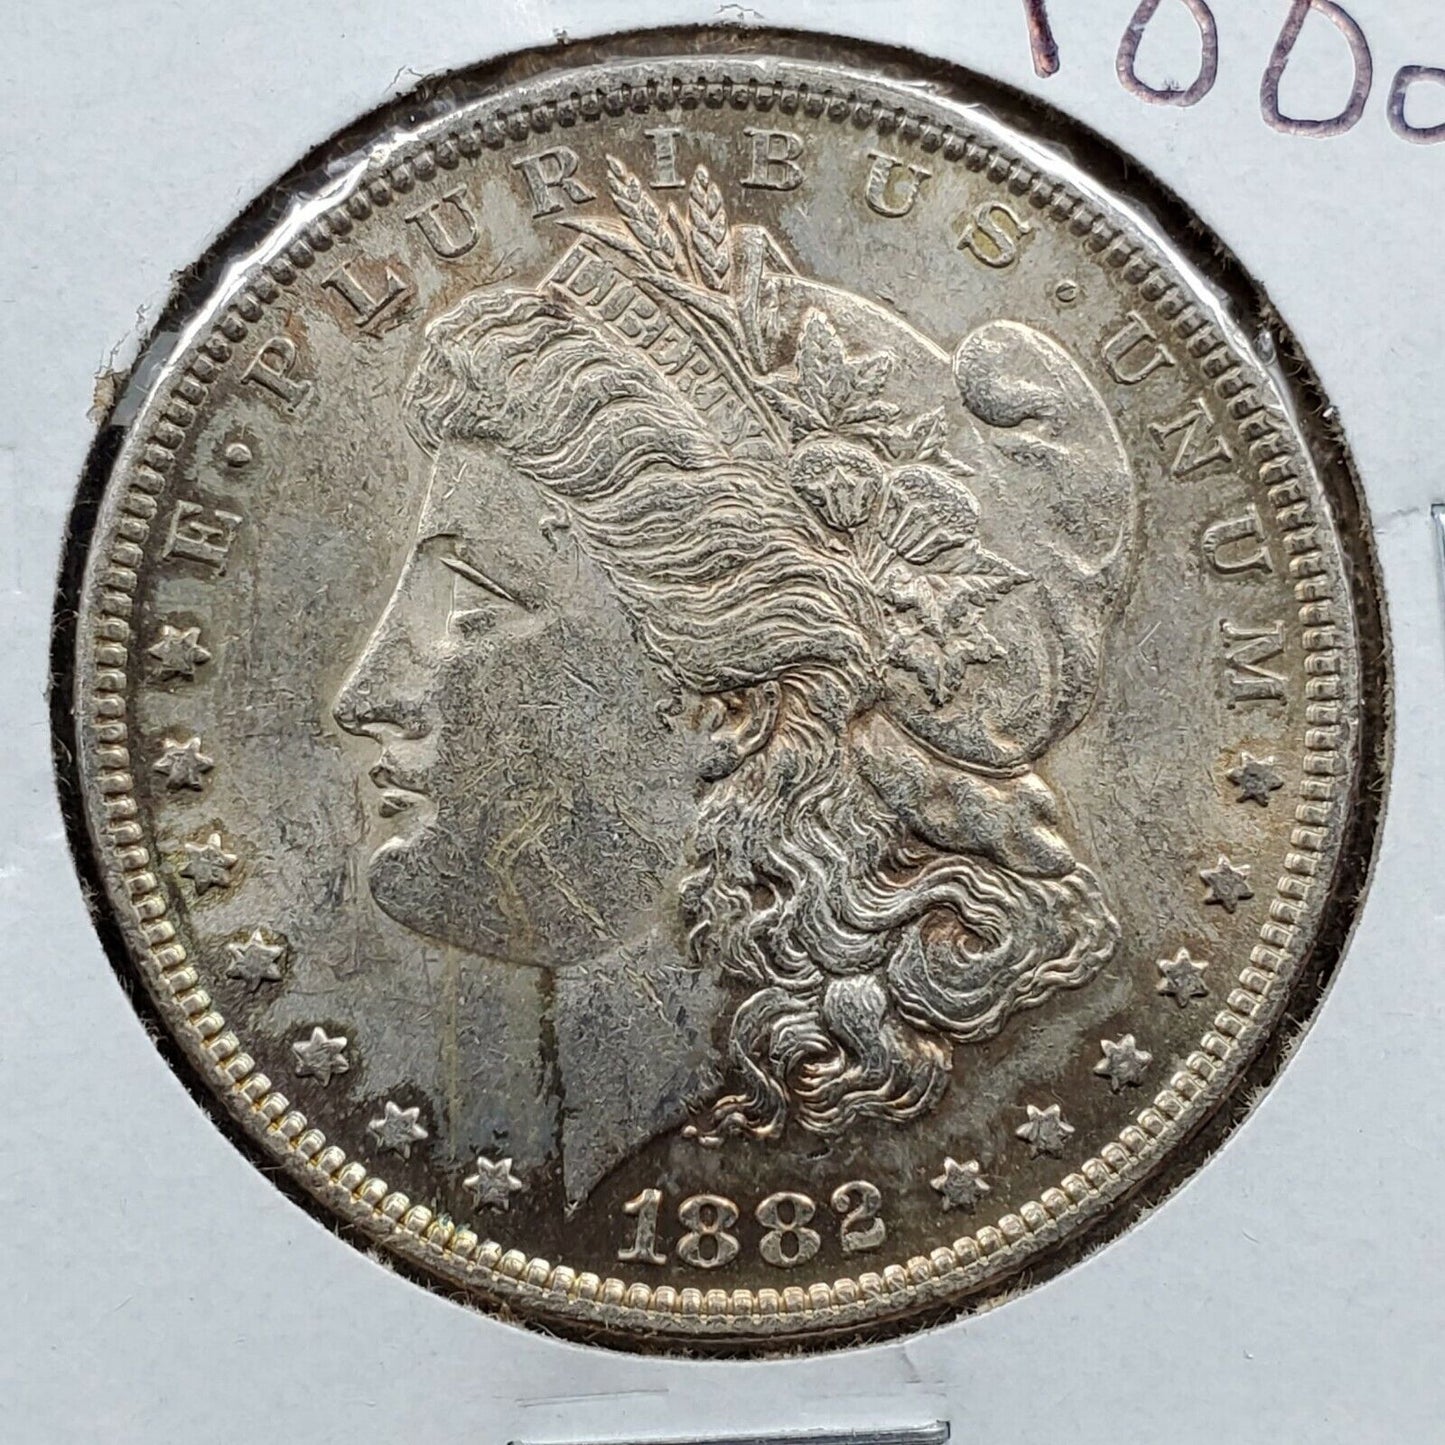 1882 P $1 Morgan Silver Eagle Dollar Coin Average BU Uncirculated Some Toning